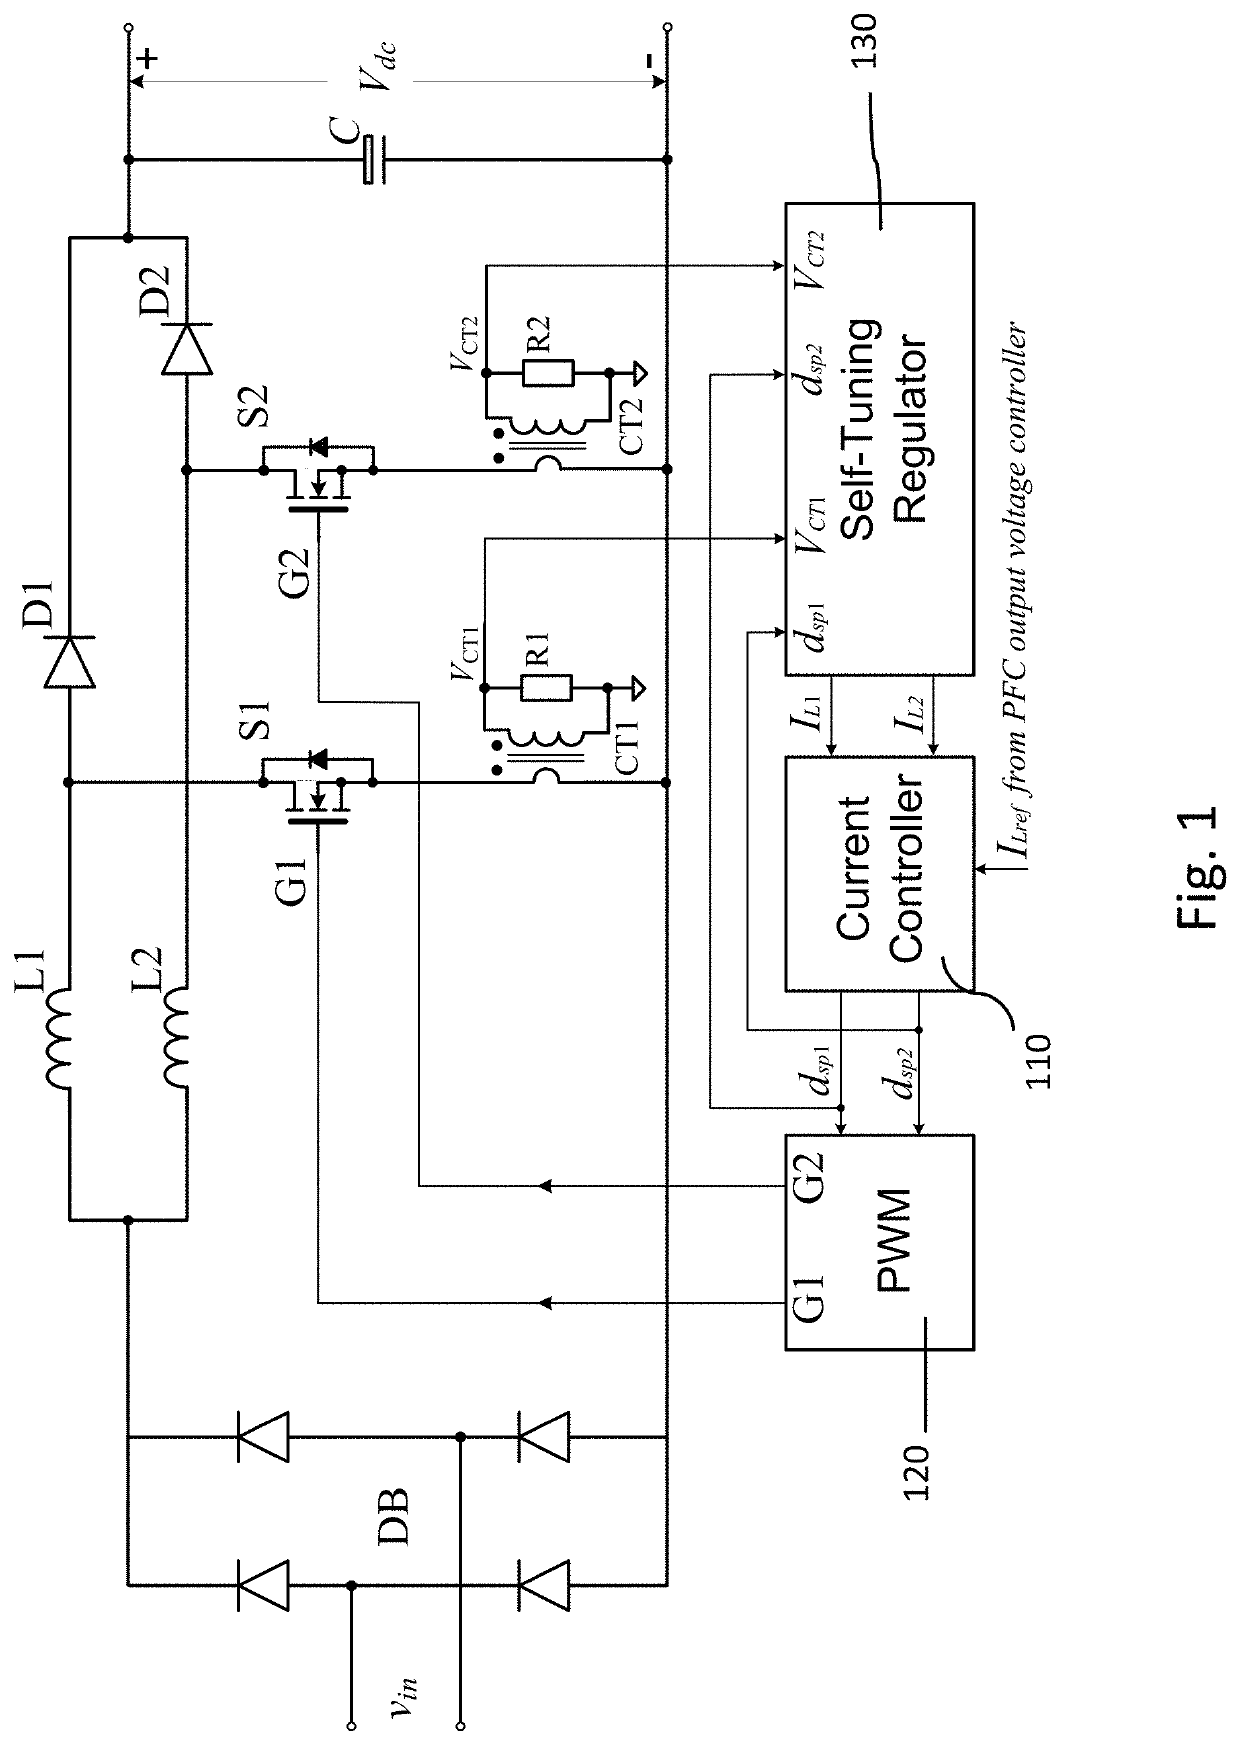 Self-tuning regulator for interleaved power factor correction circuits and method of self-tuning regulation